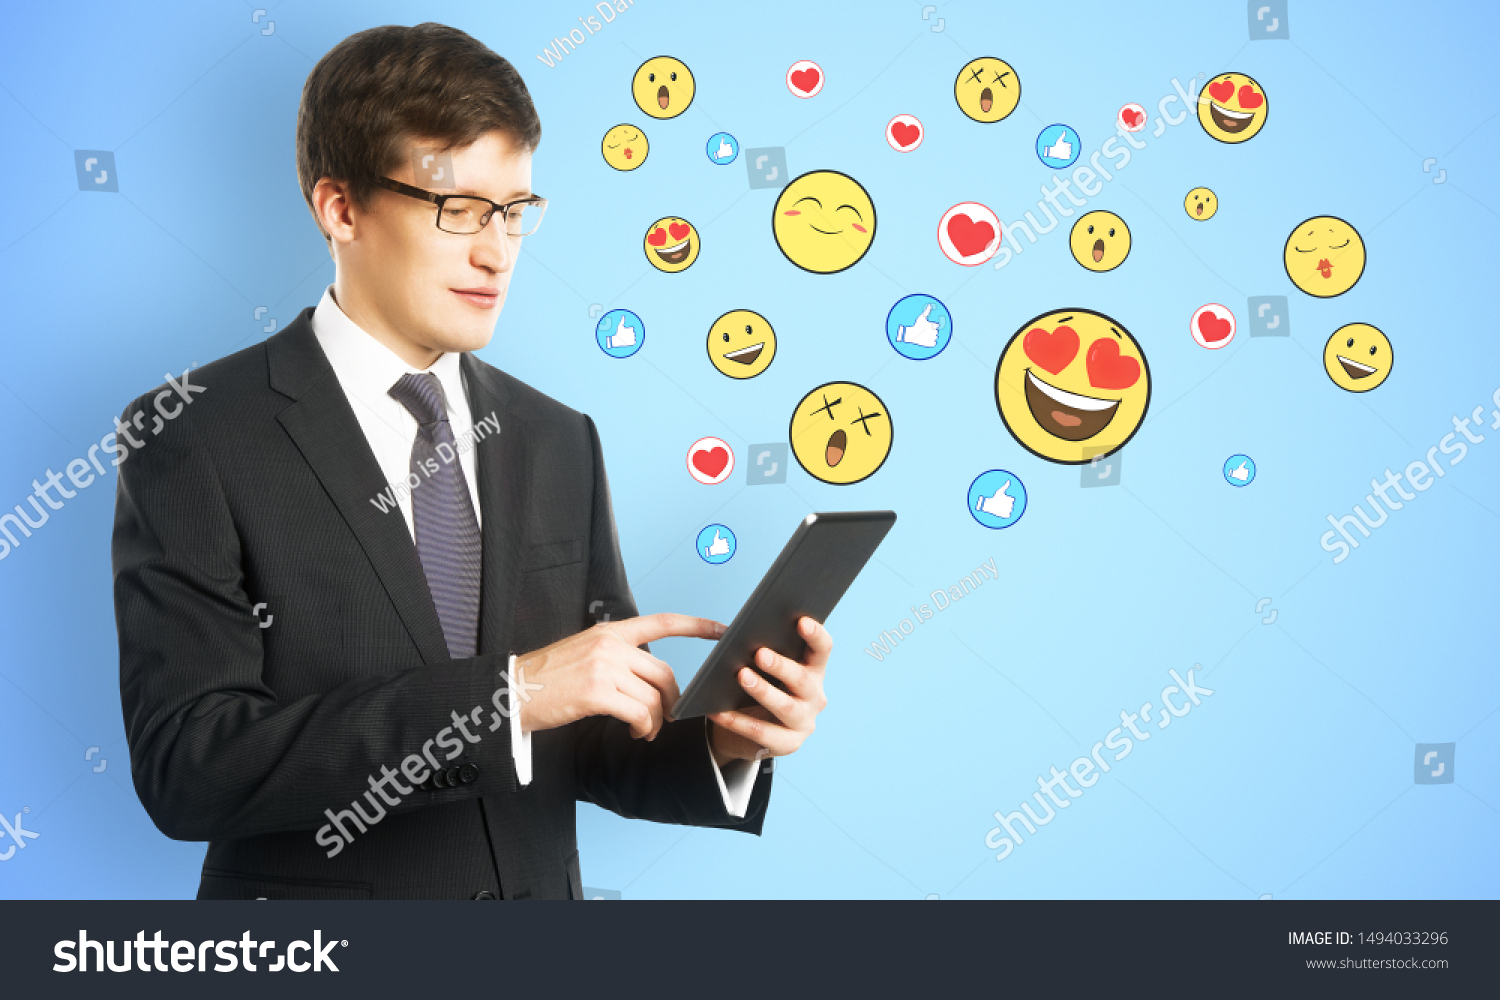 Portrait of handsome young businessman using tablet with emotive on subtle background. Communication and emotion concept #1494033296